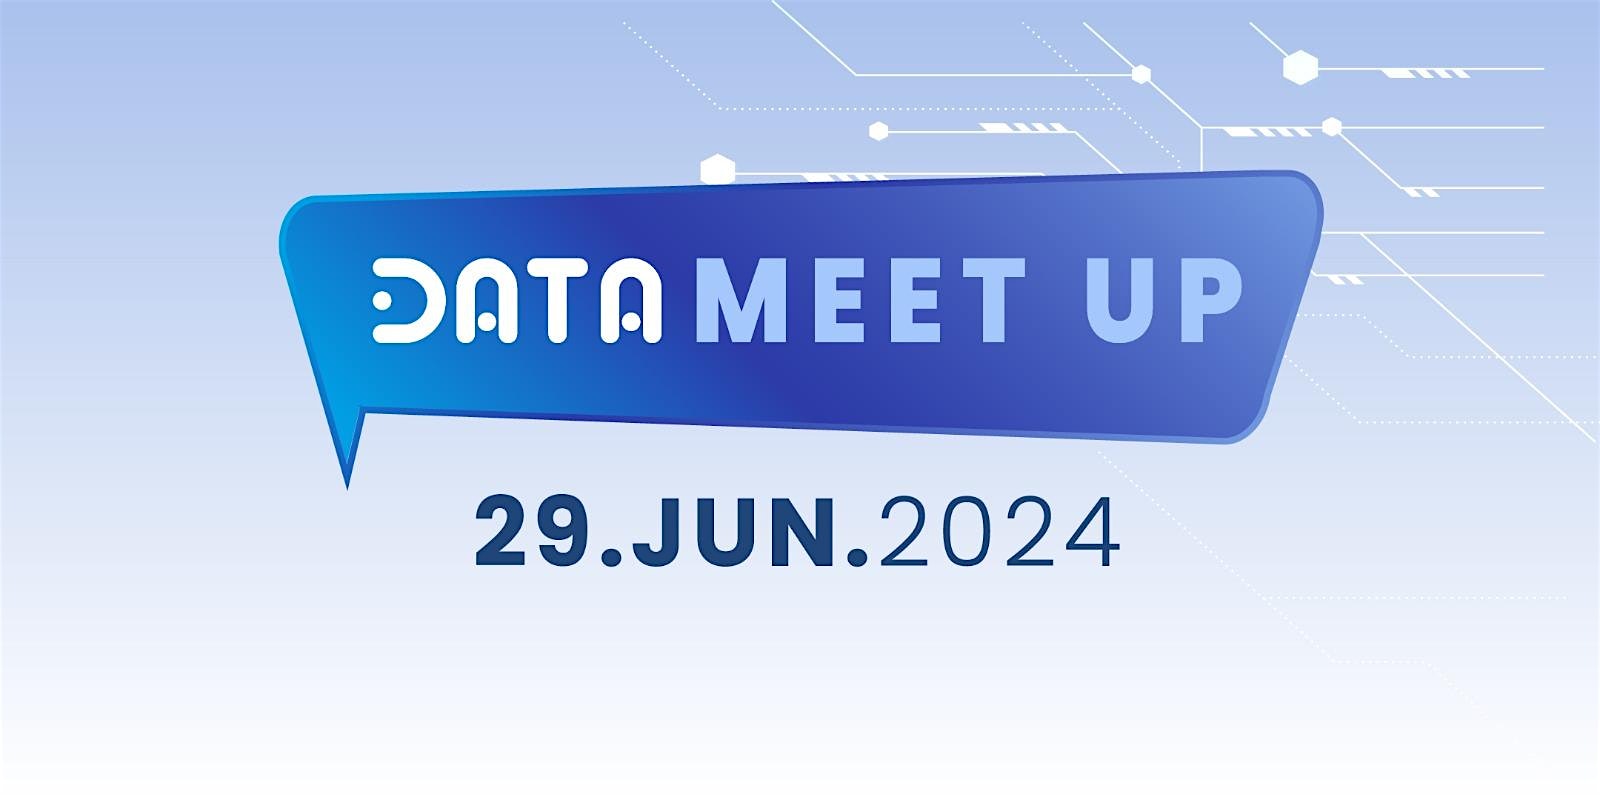 Data Meet Up - Junio 2024